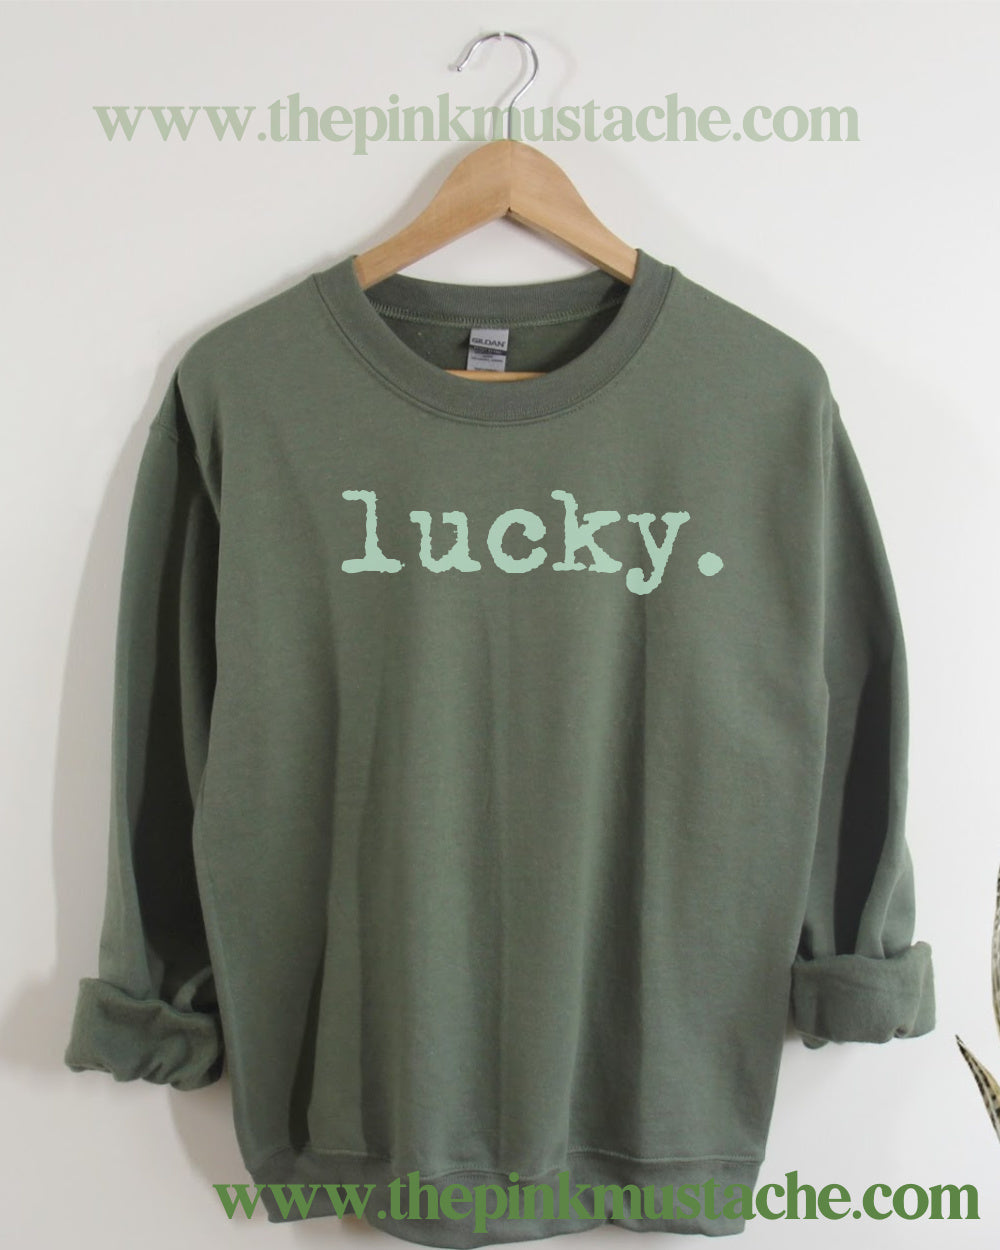 SALE Lucky St Patty's Day Retro Vibes Sweatshirt / Western Vintage Style Sweater - St Patricks Day Shirt